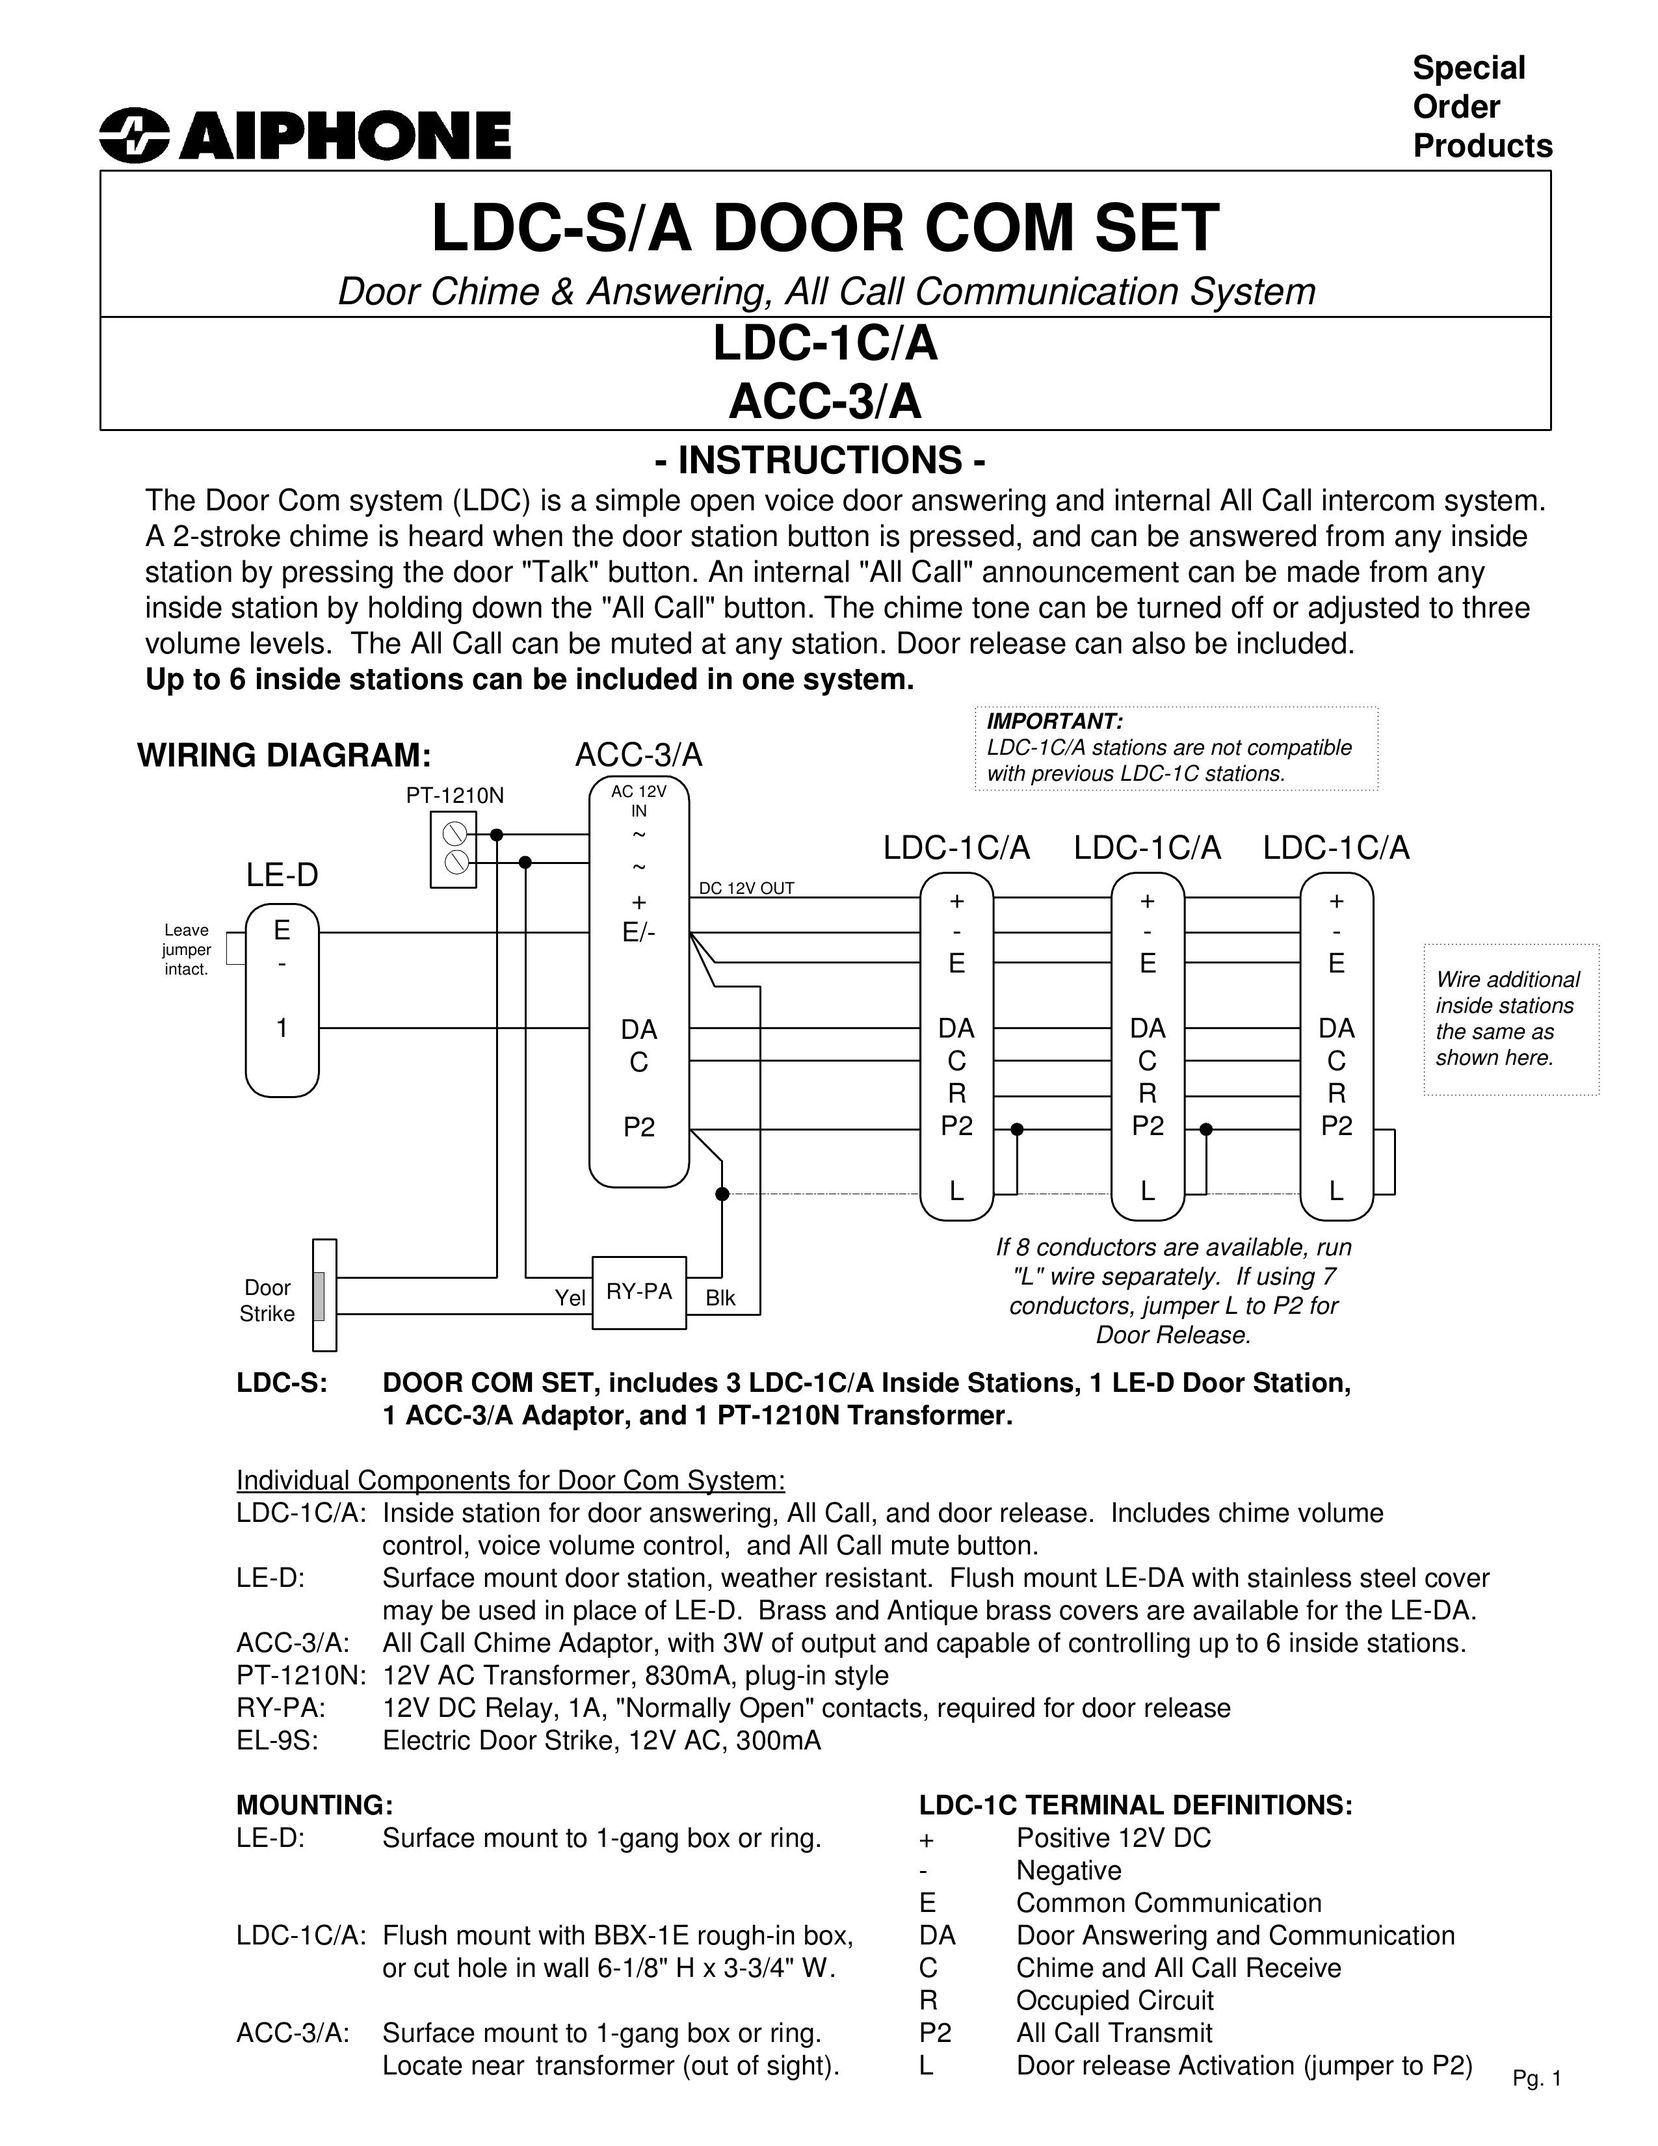 Aiphone ACC-3/A Intercom System User Manual